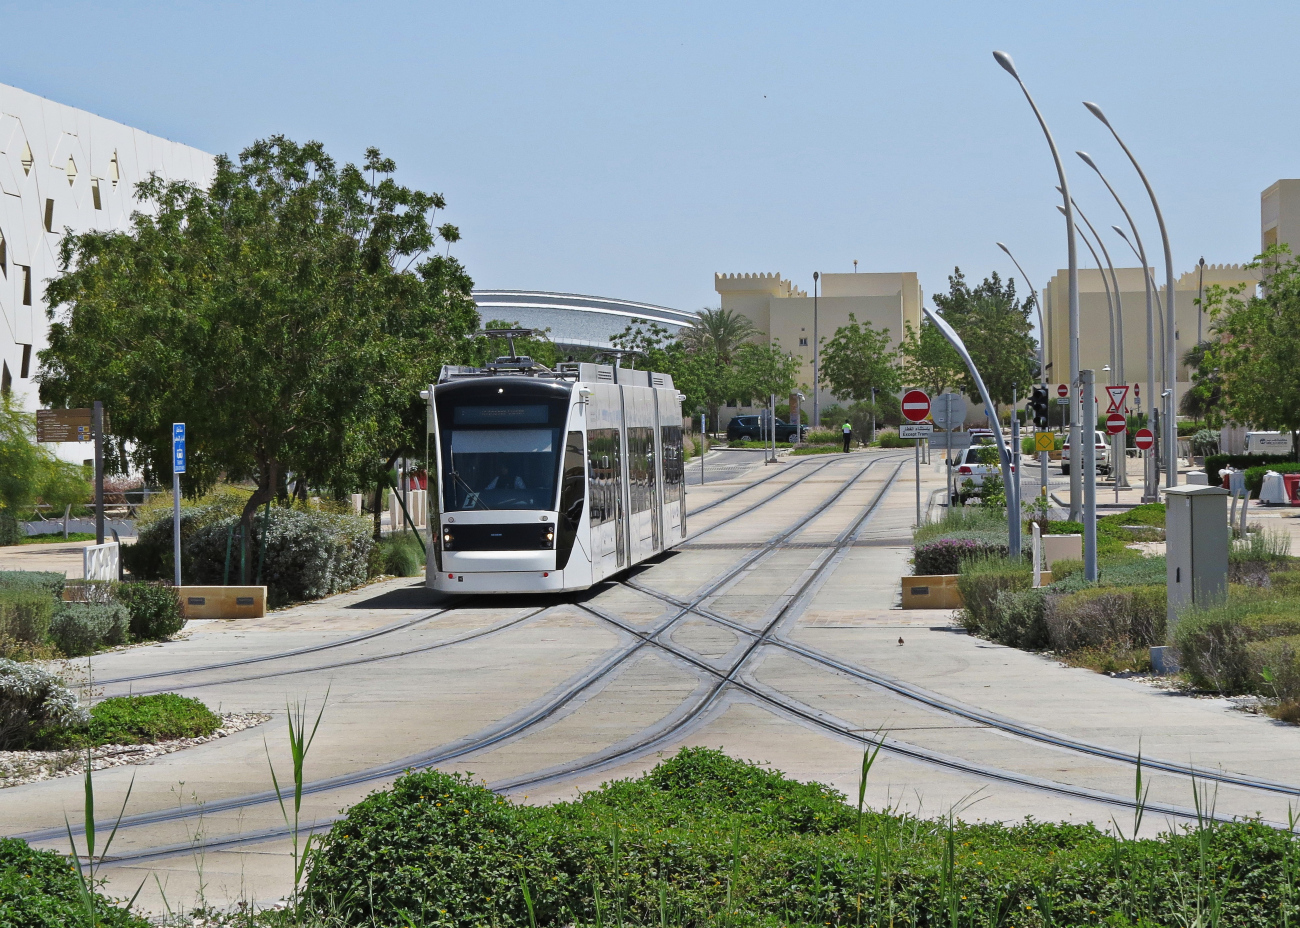 Doha, Siemens Avenio č. 11; Doha — Education City Tram — Lines and Infrastructure